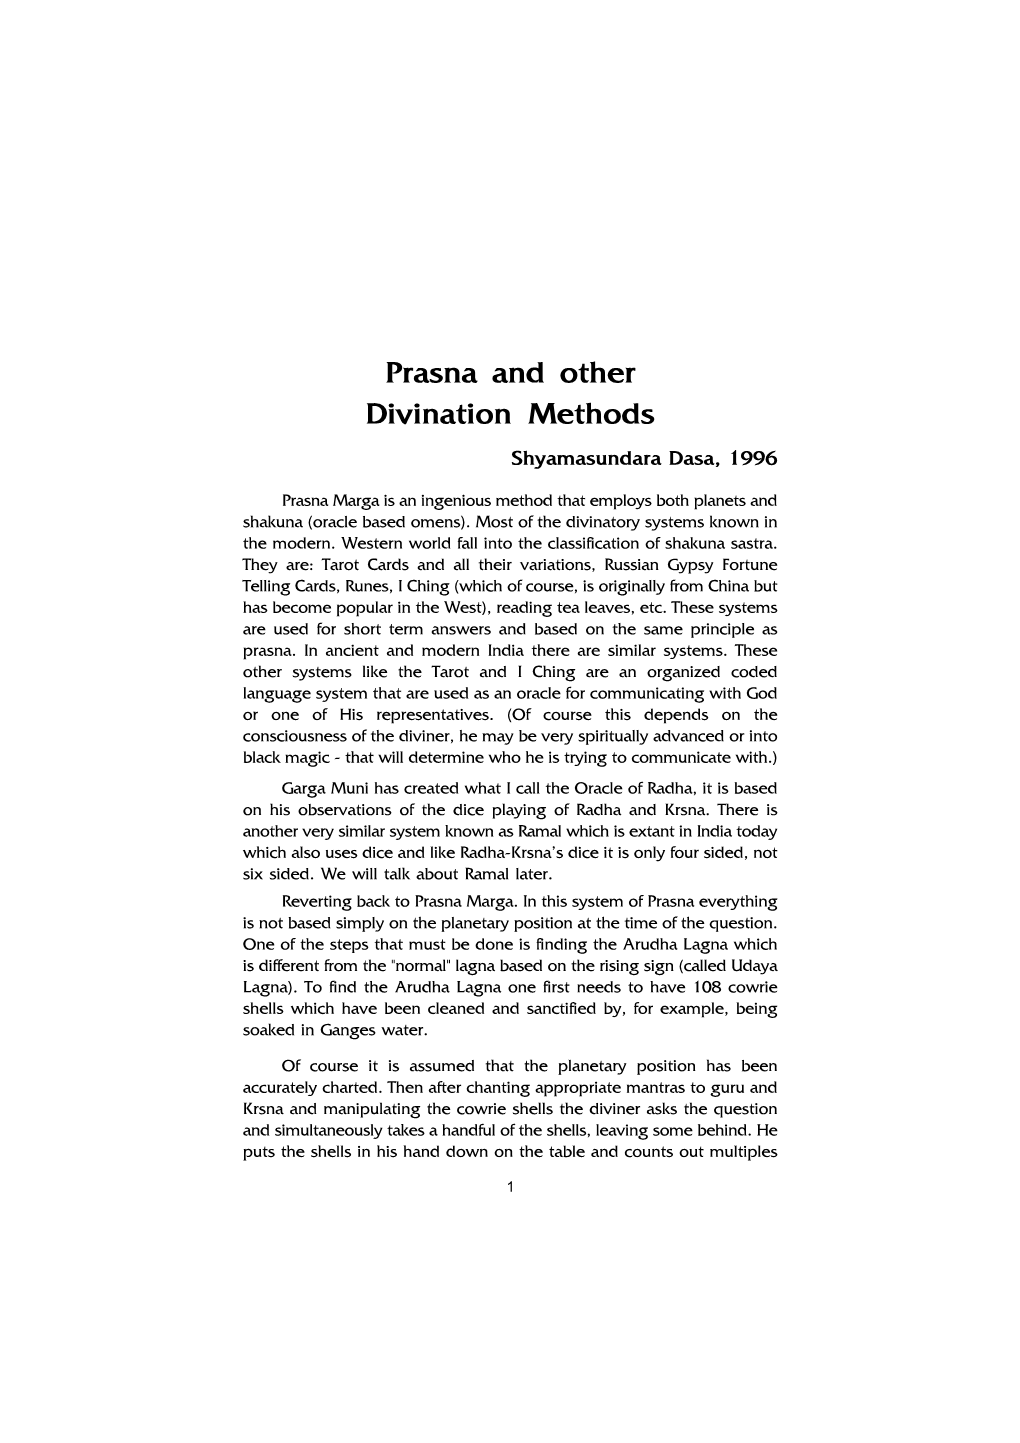 Prasna and Other Divination Methods Shyamasundara Dasa, 1996